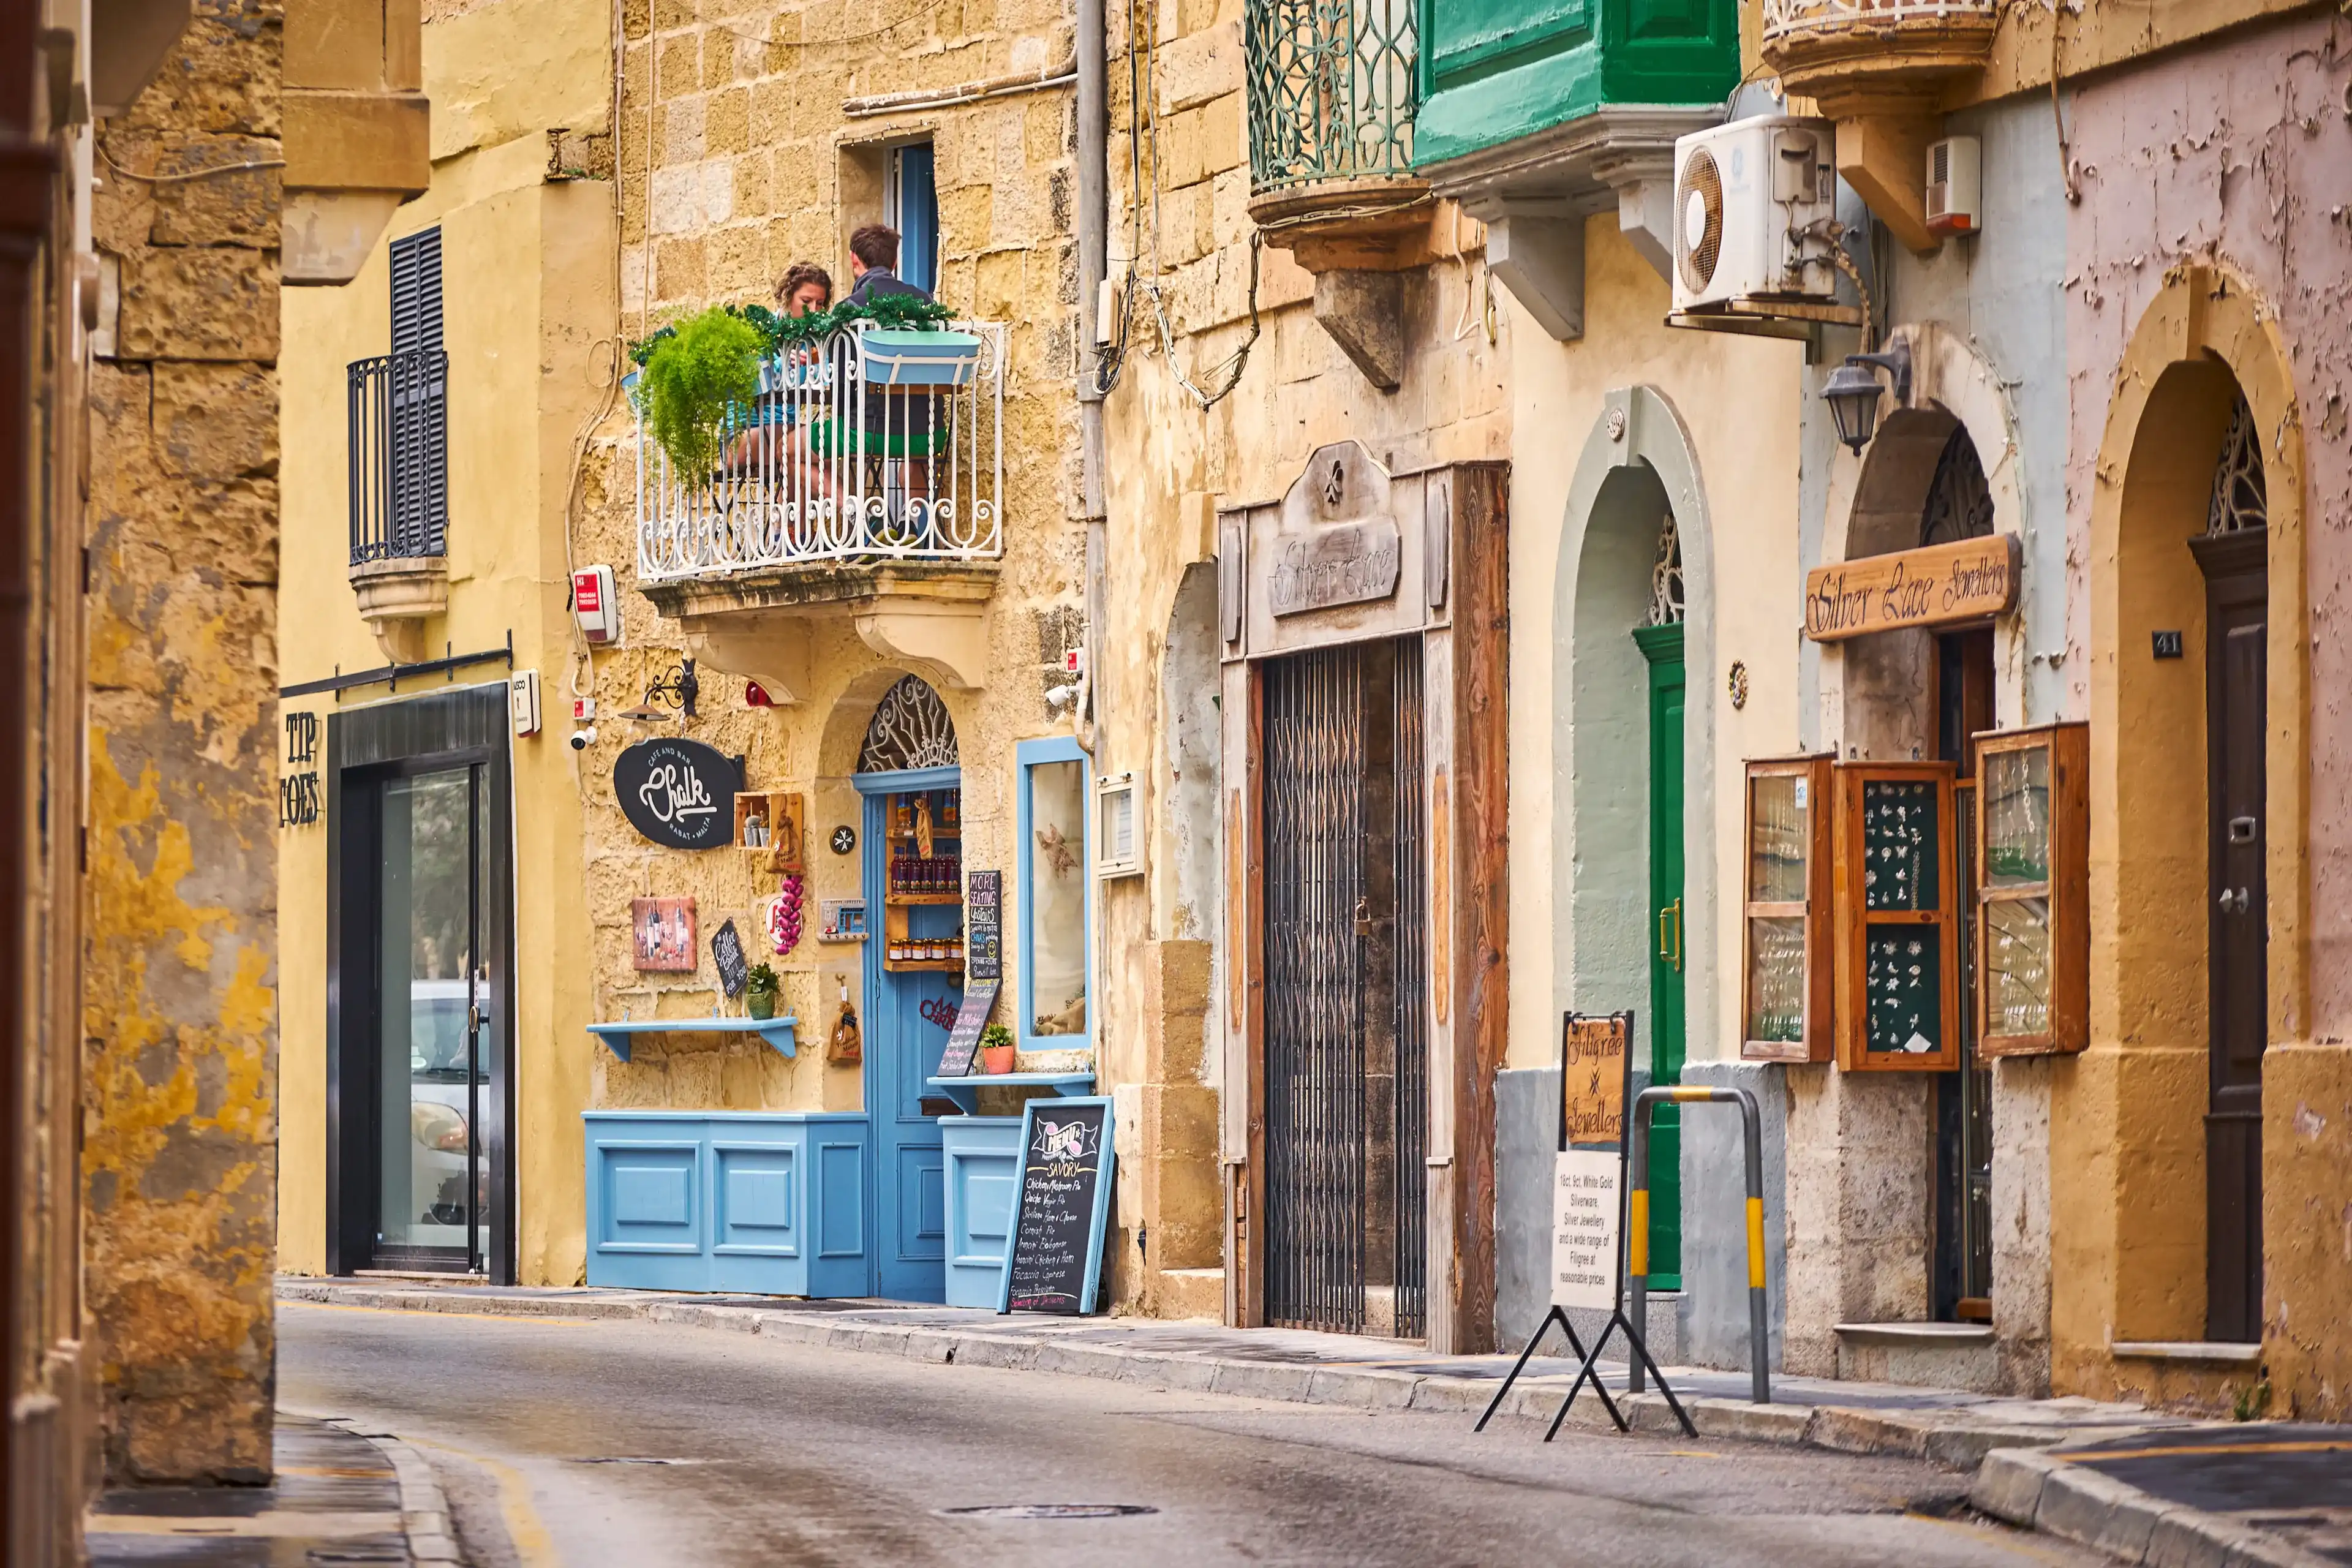 RABAT/MALTA - November 21, 2017: The main street in Rabat, Malta